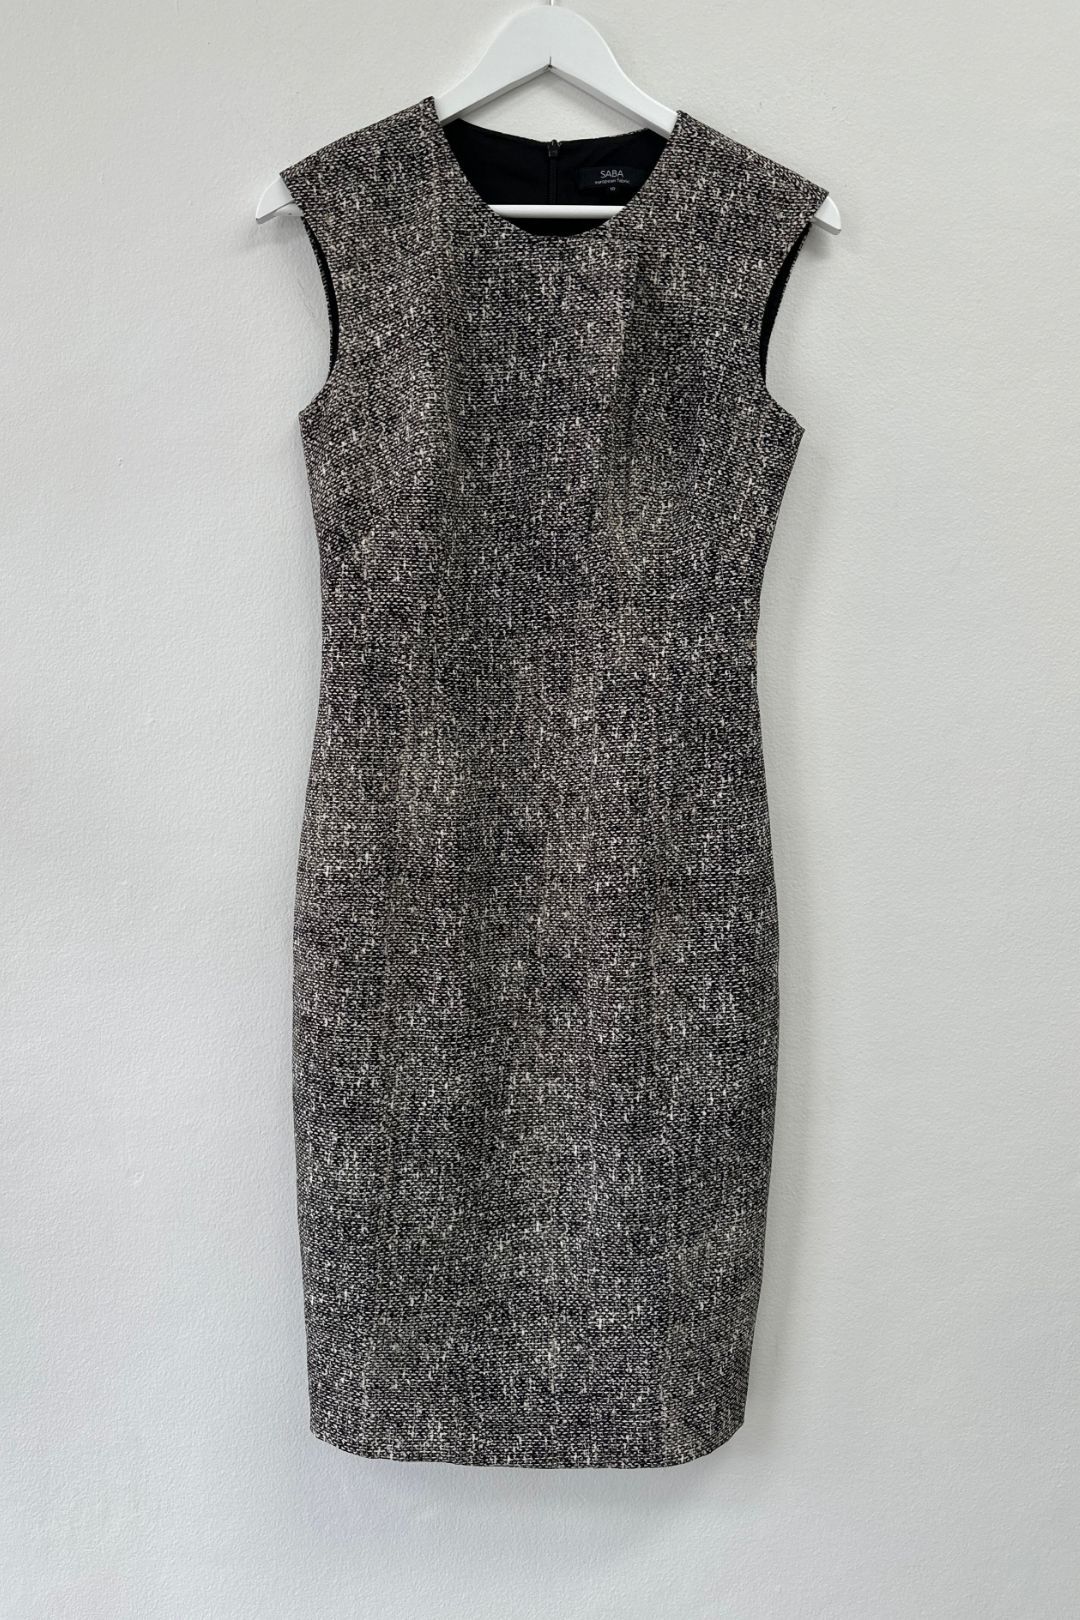 Saba - Tweed Print Sleeveless Dress